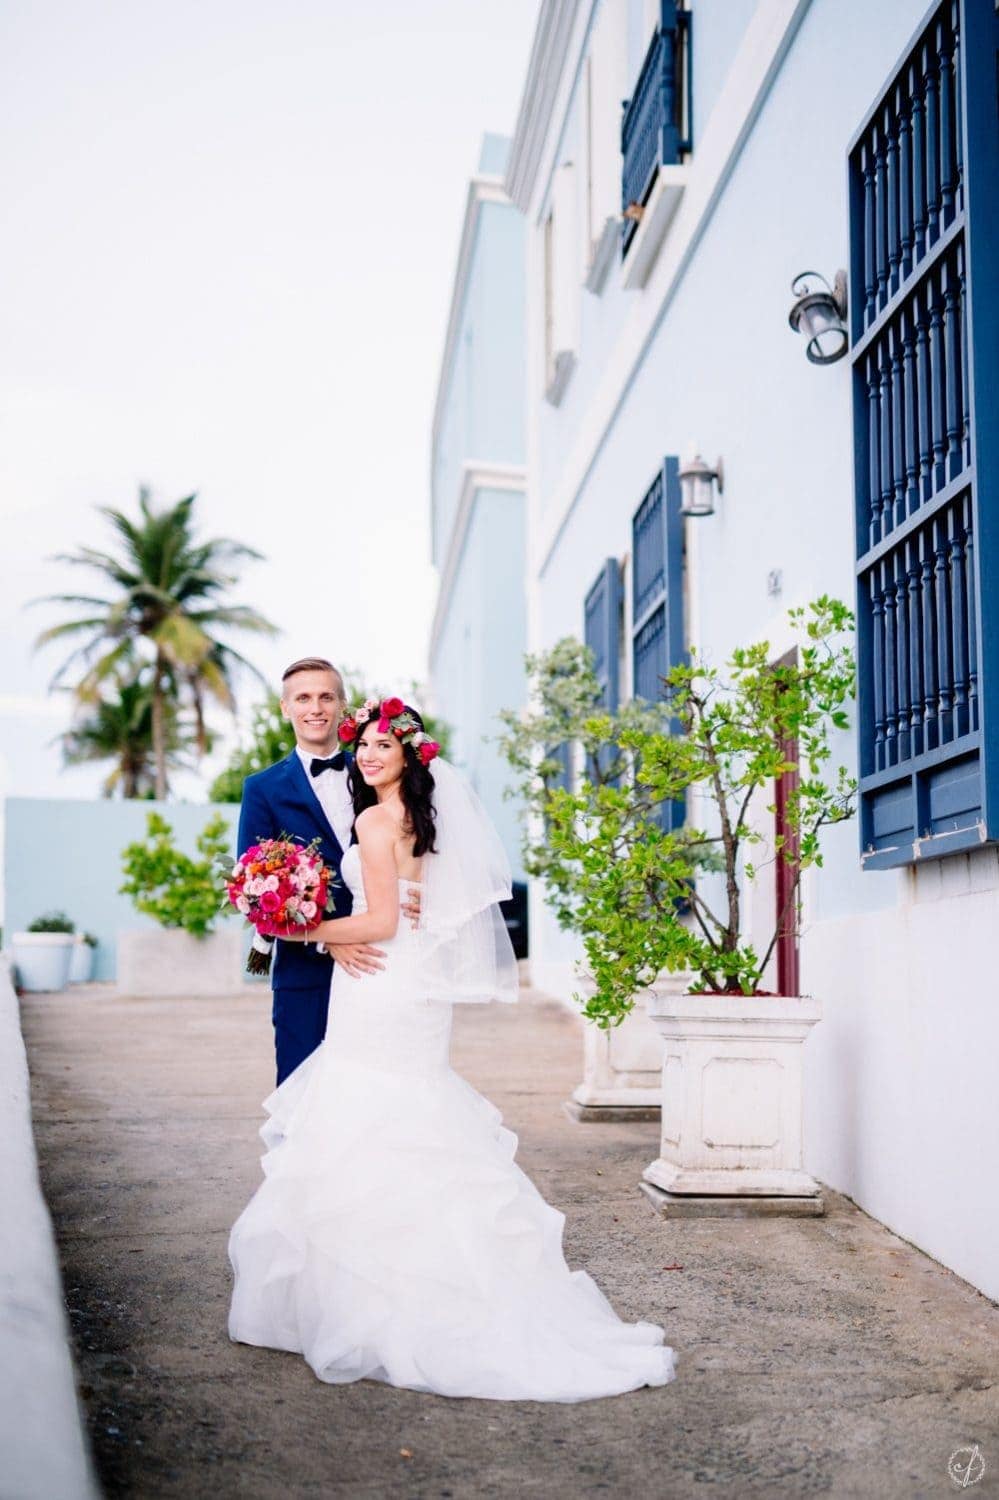 Old San Juan Puerto Rico destination wedding photography by Camille Fontanez